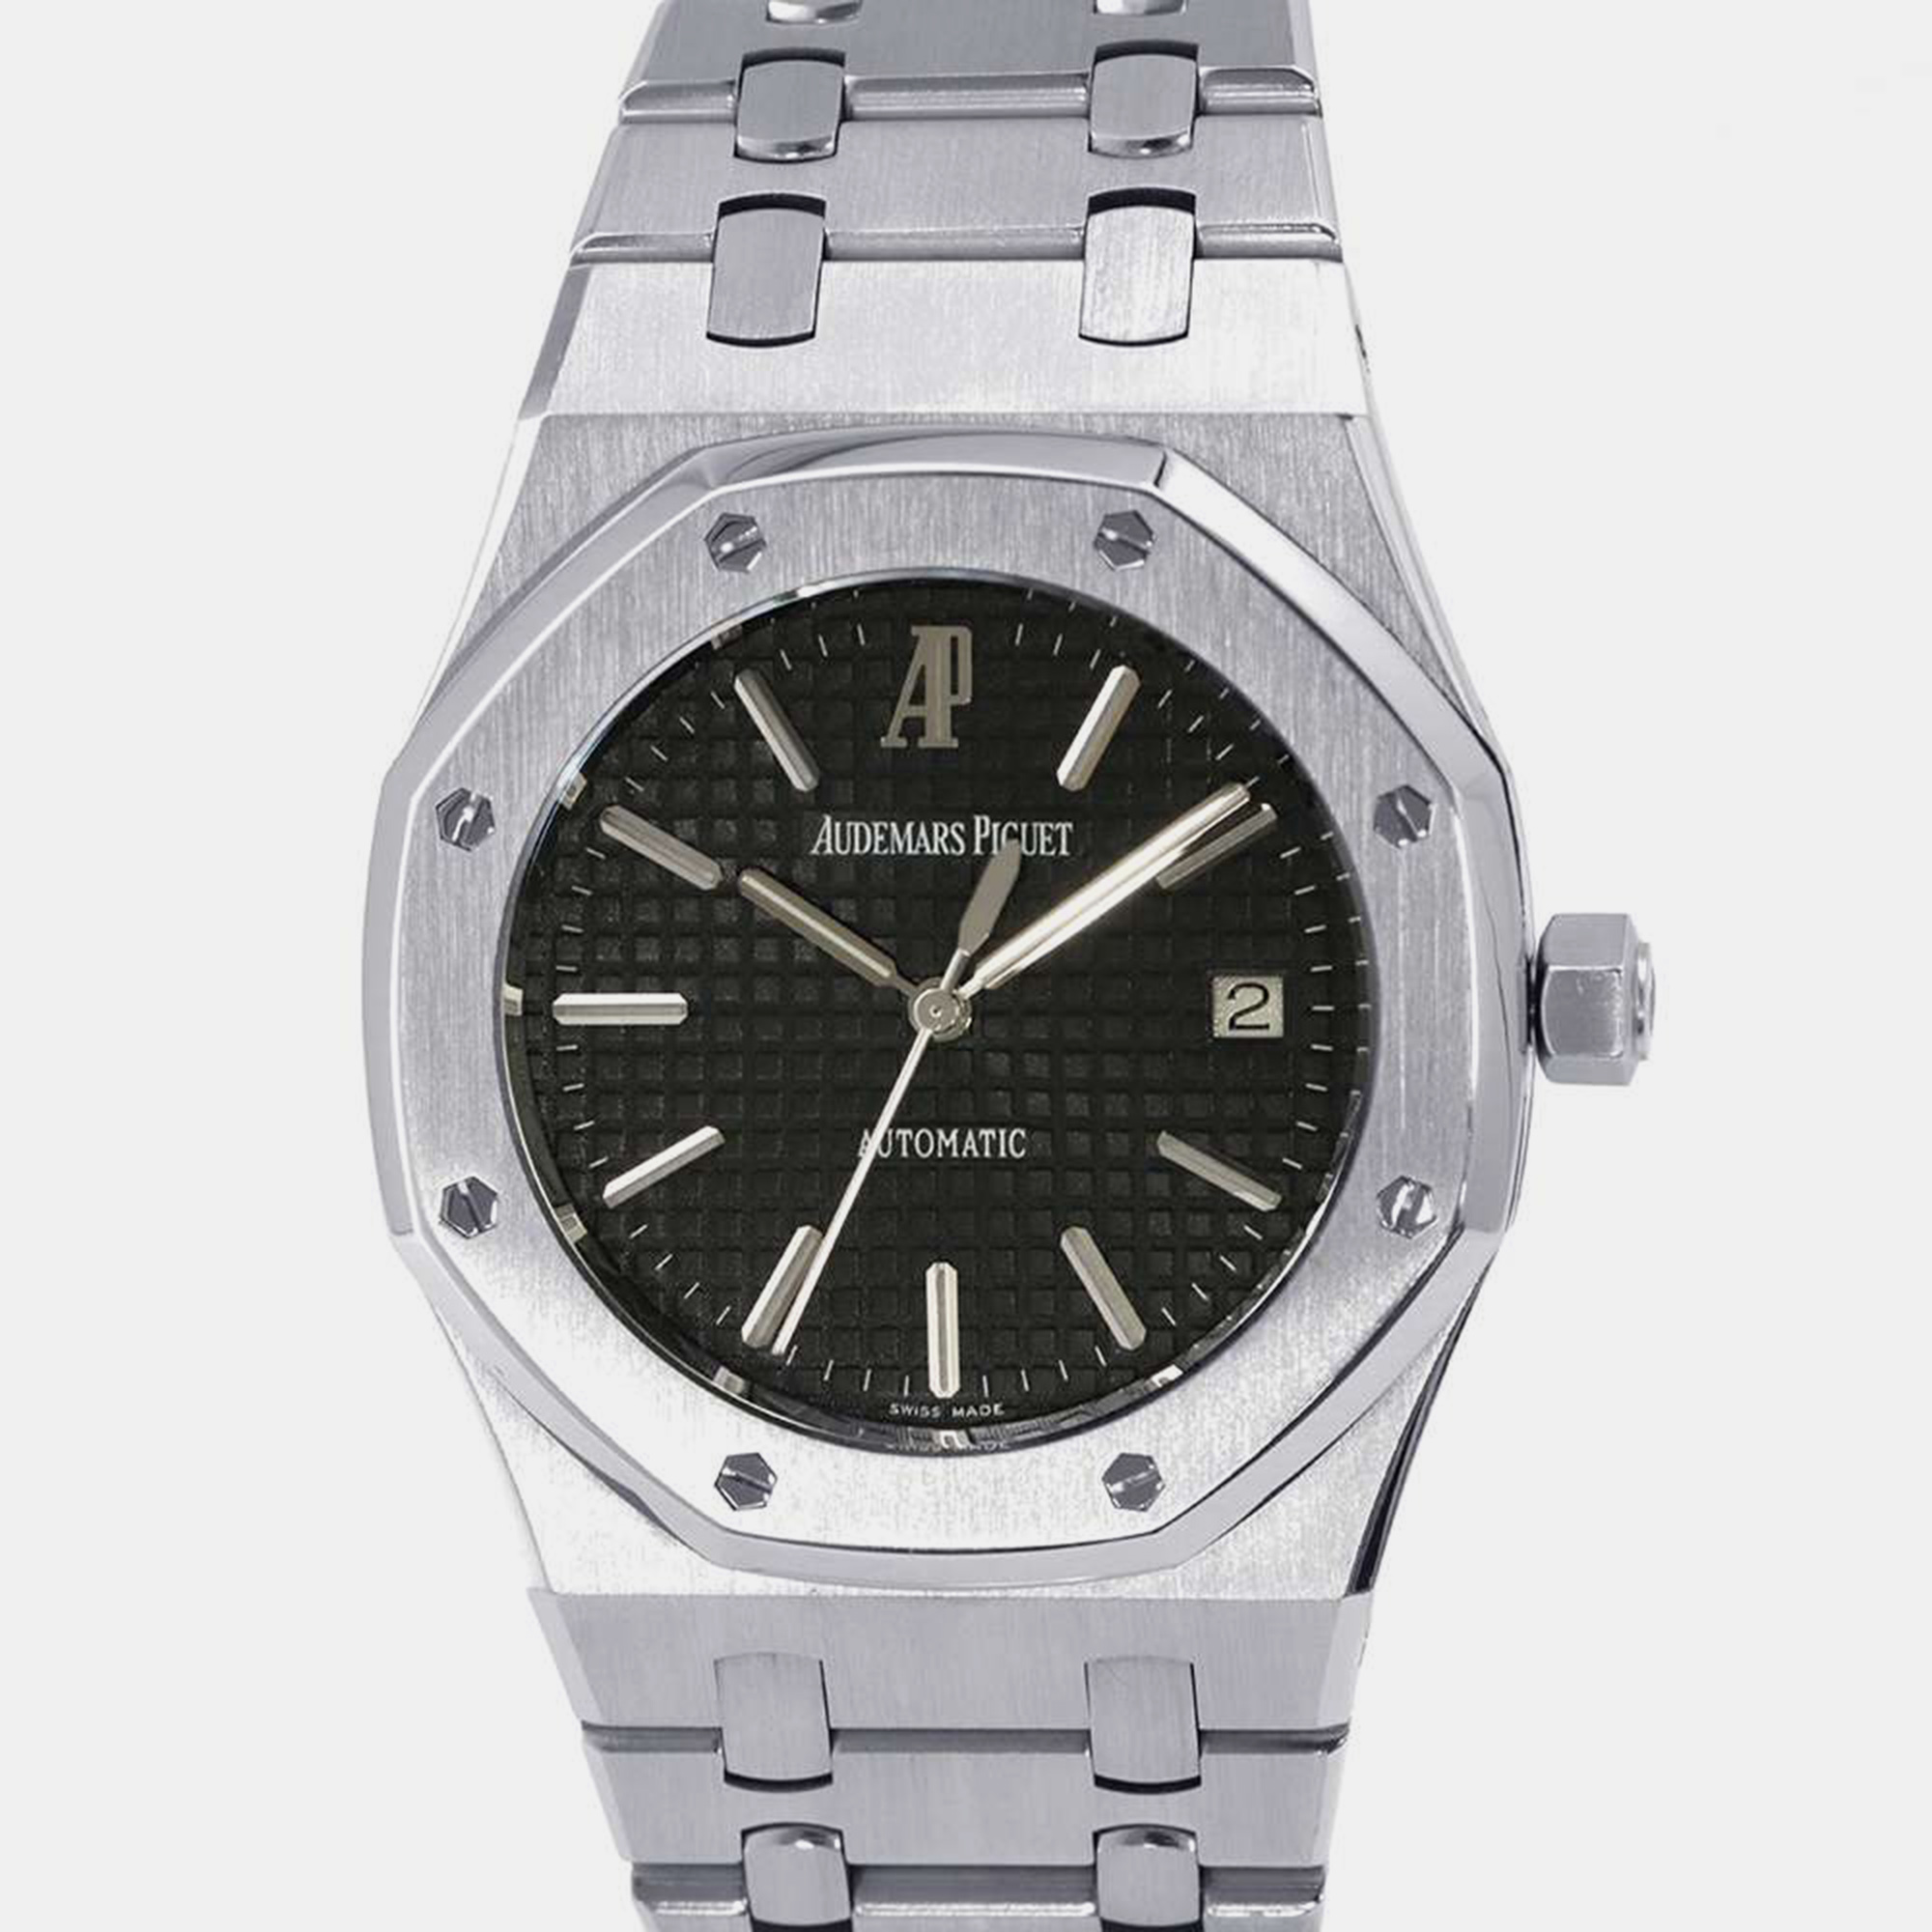 Audemars piguet black stainless steel royal oak automatic men's wristwatch 39 mm